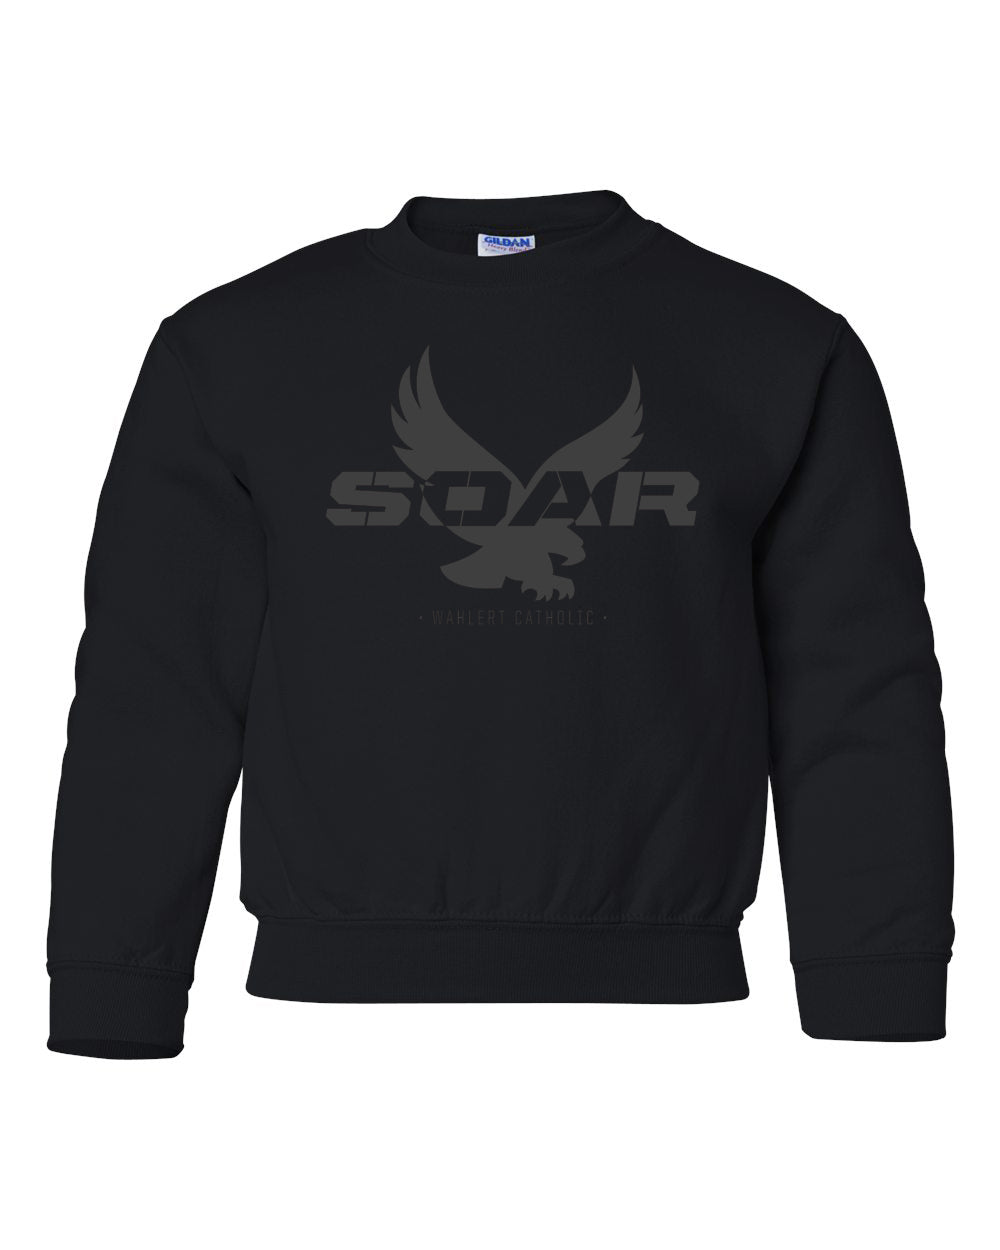 18000B - SOAR SPIRIT - Youth Crewneck Sweatshirt